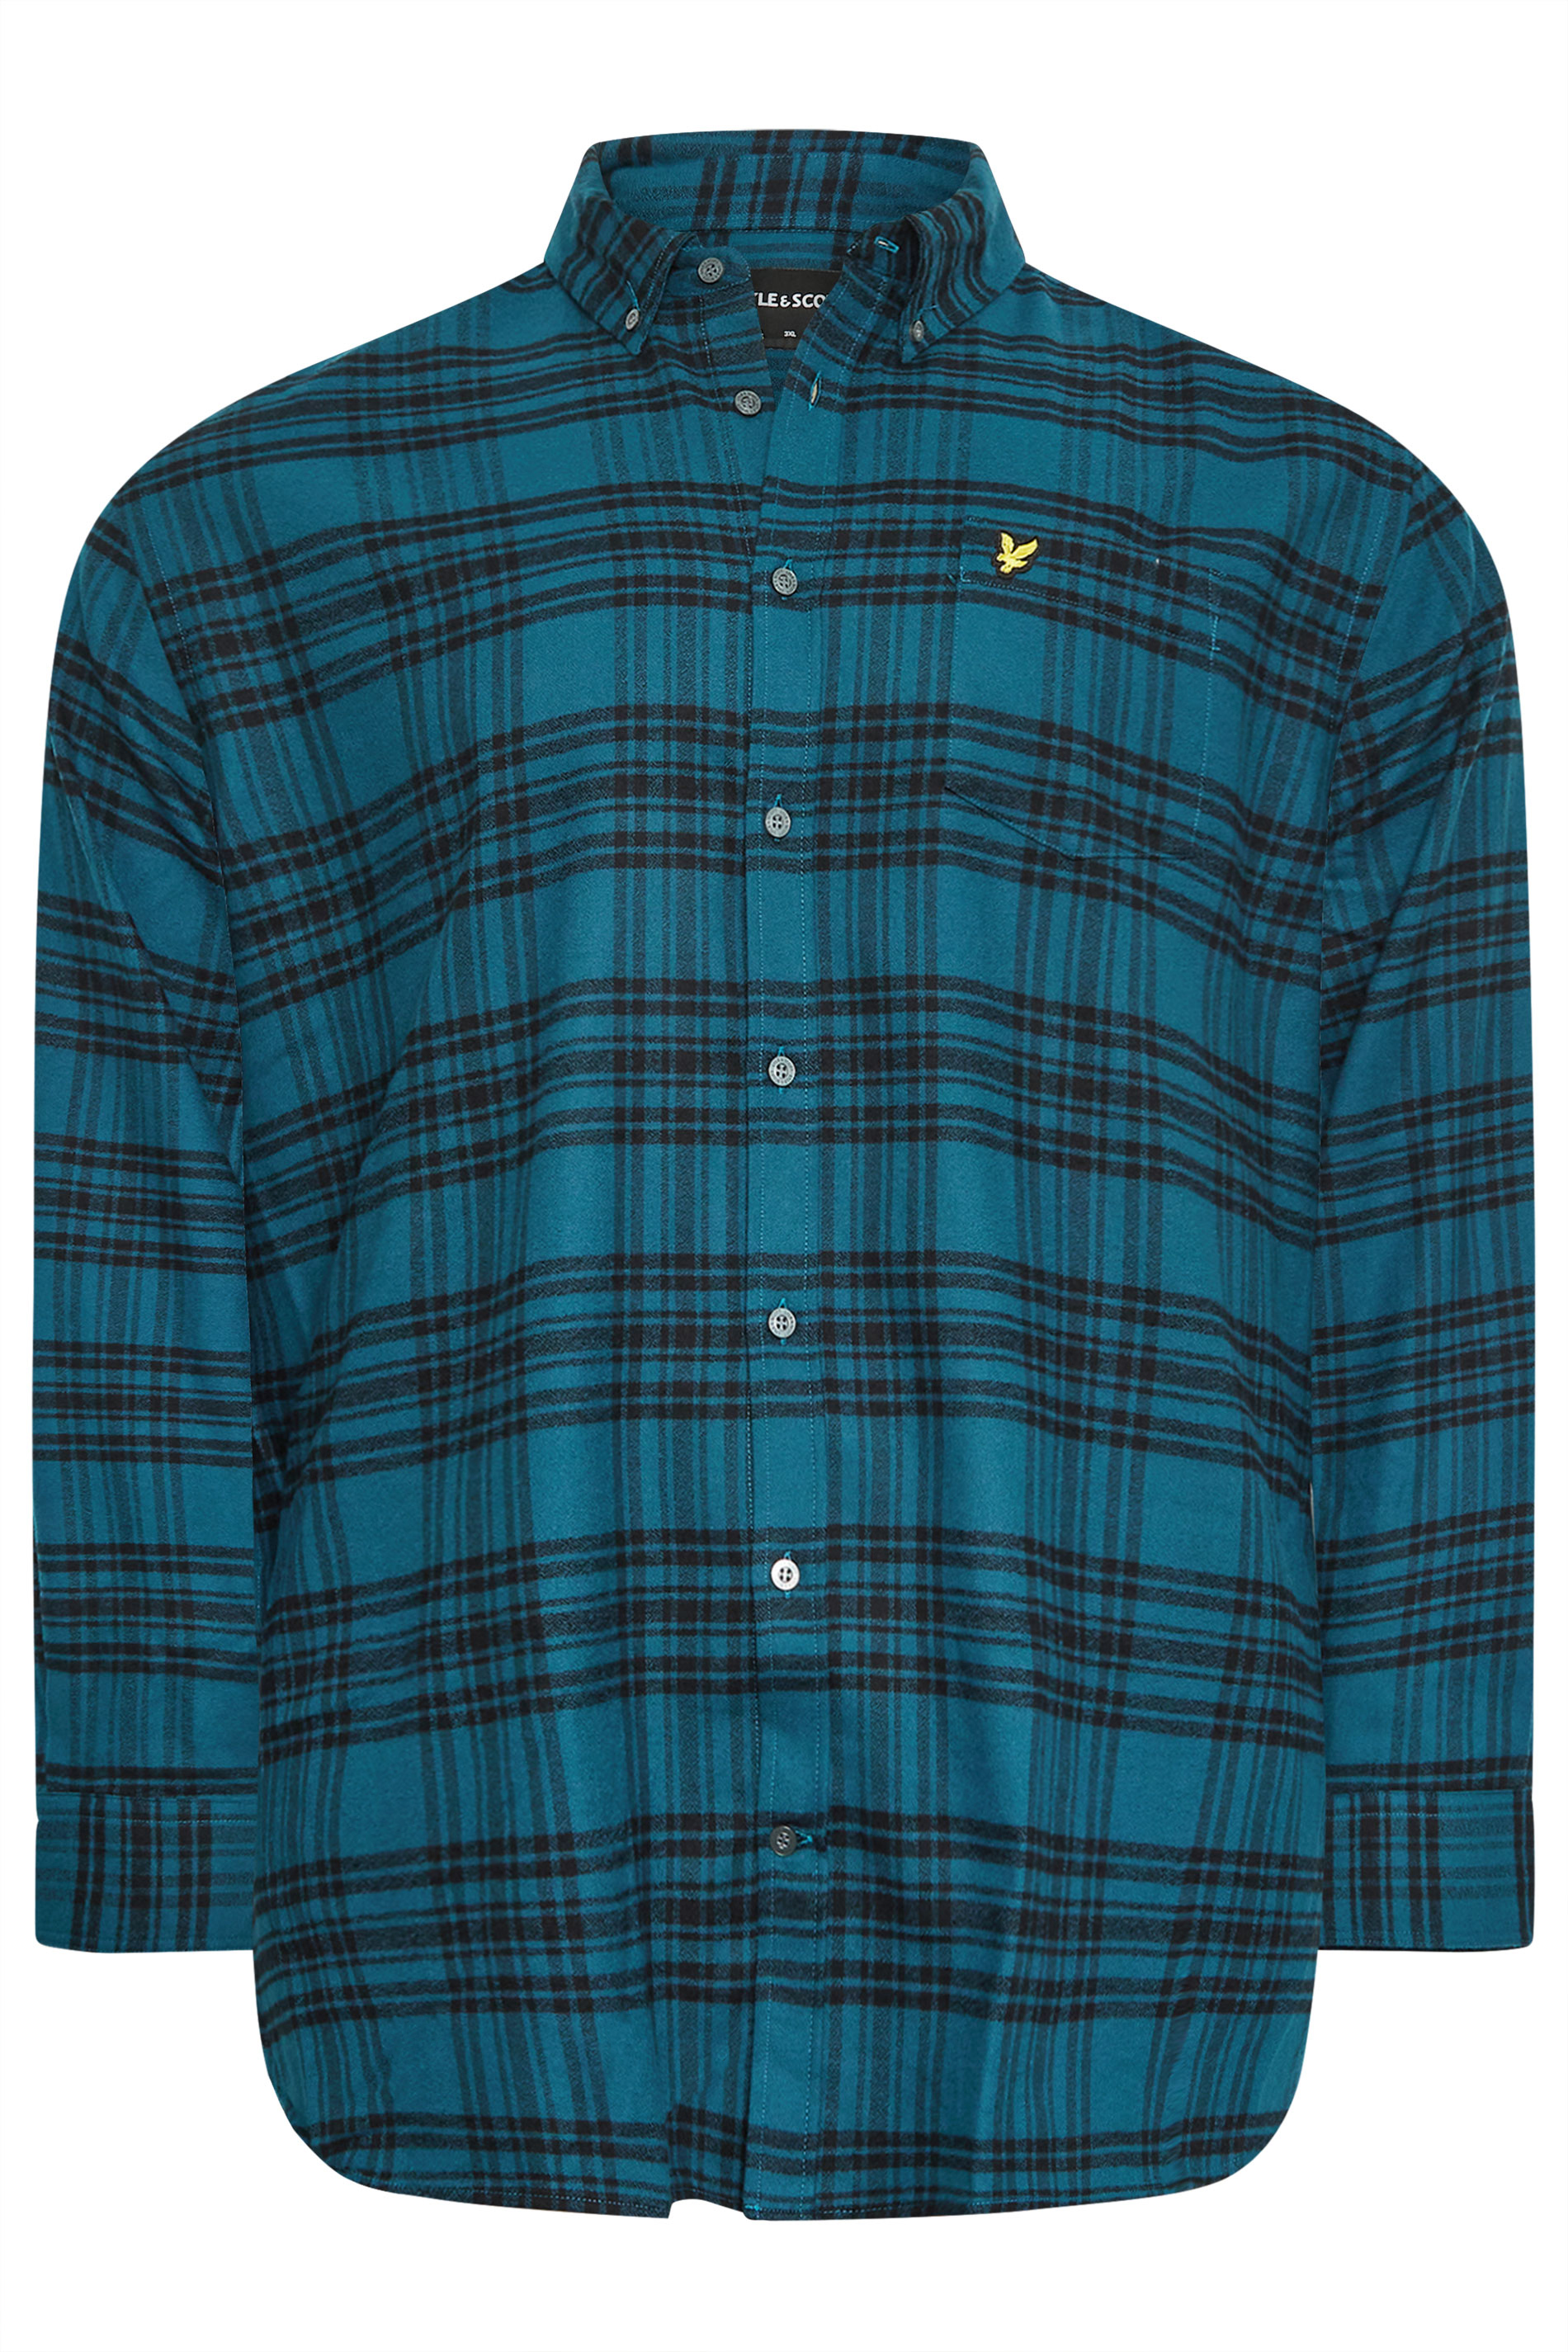 LYLE & SCOTT Big & Tall Navy Blue Check Flannel Shirt | BadRhino 2